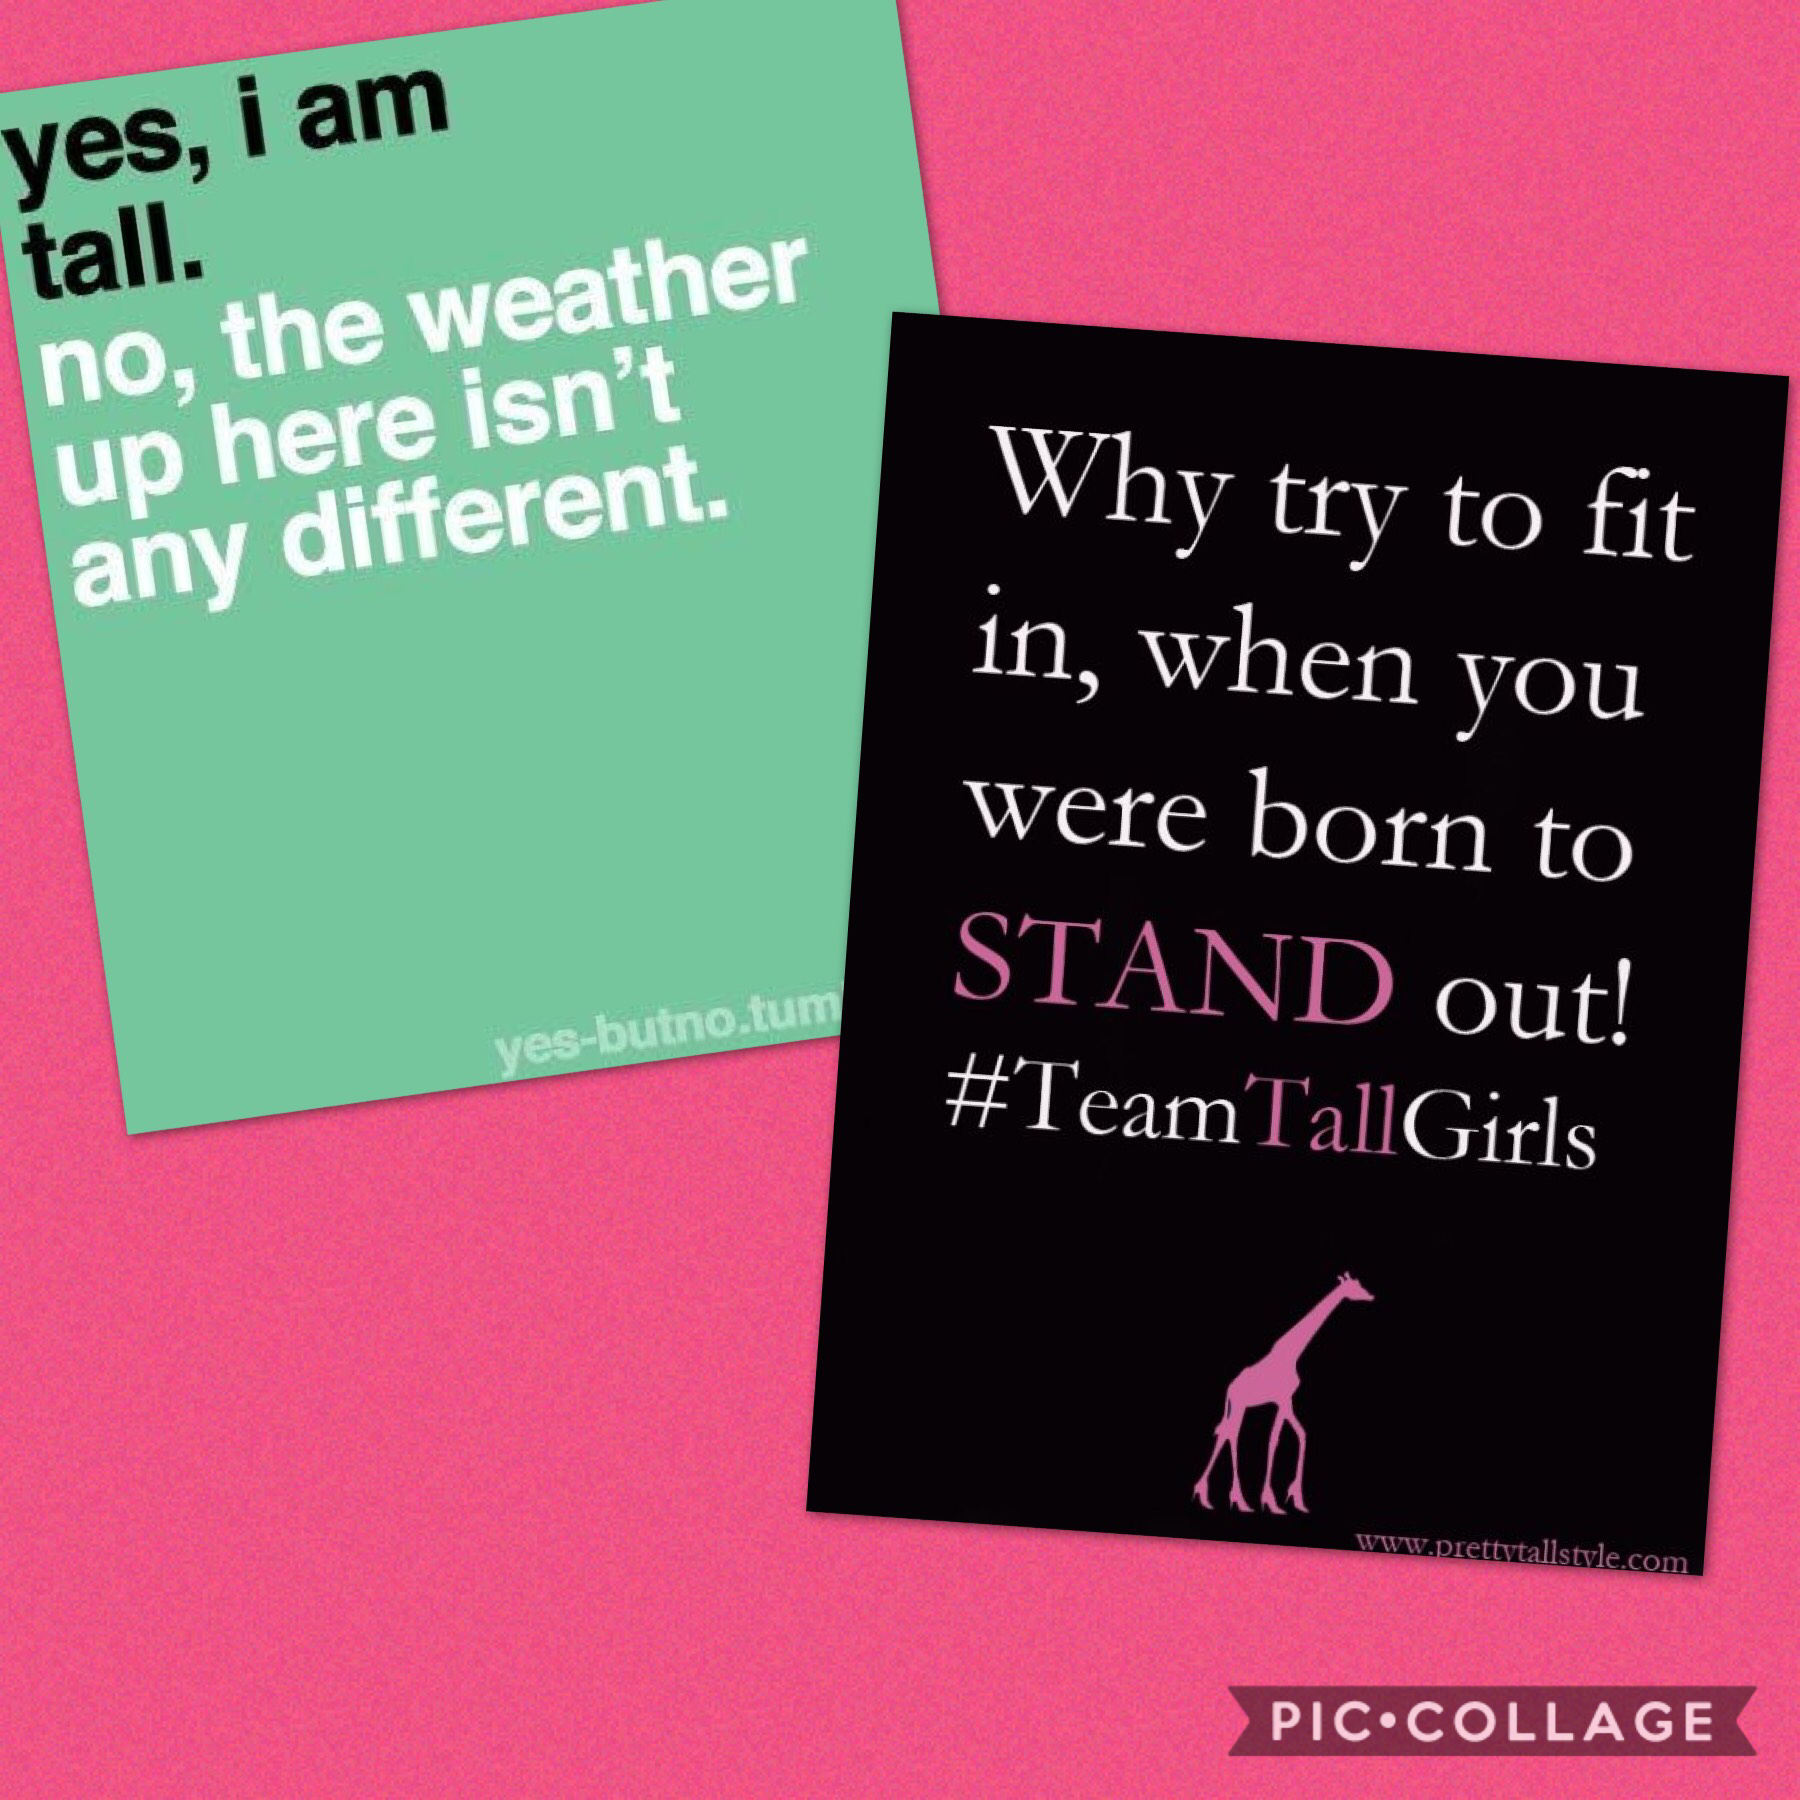 #TeamTallGirls #TallGirlProblems
#TheWeatherIsFine